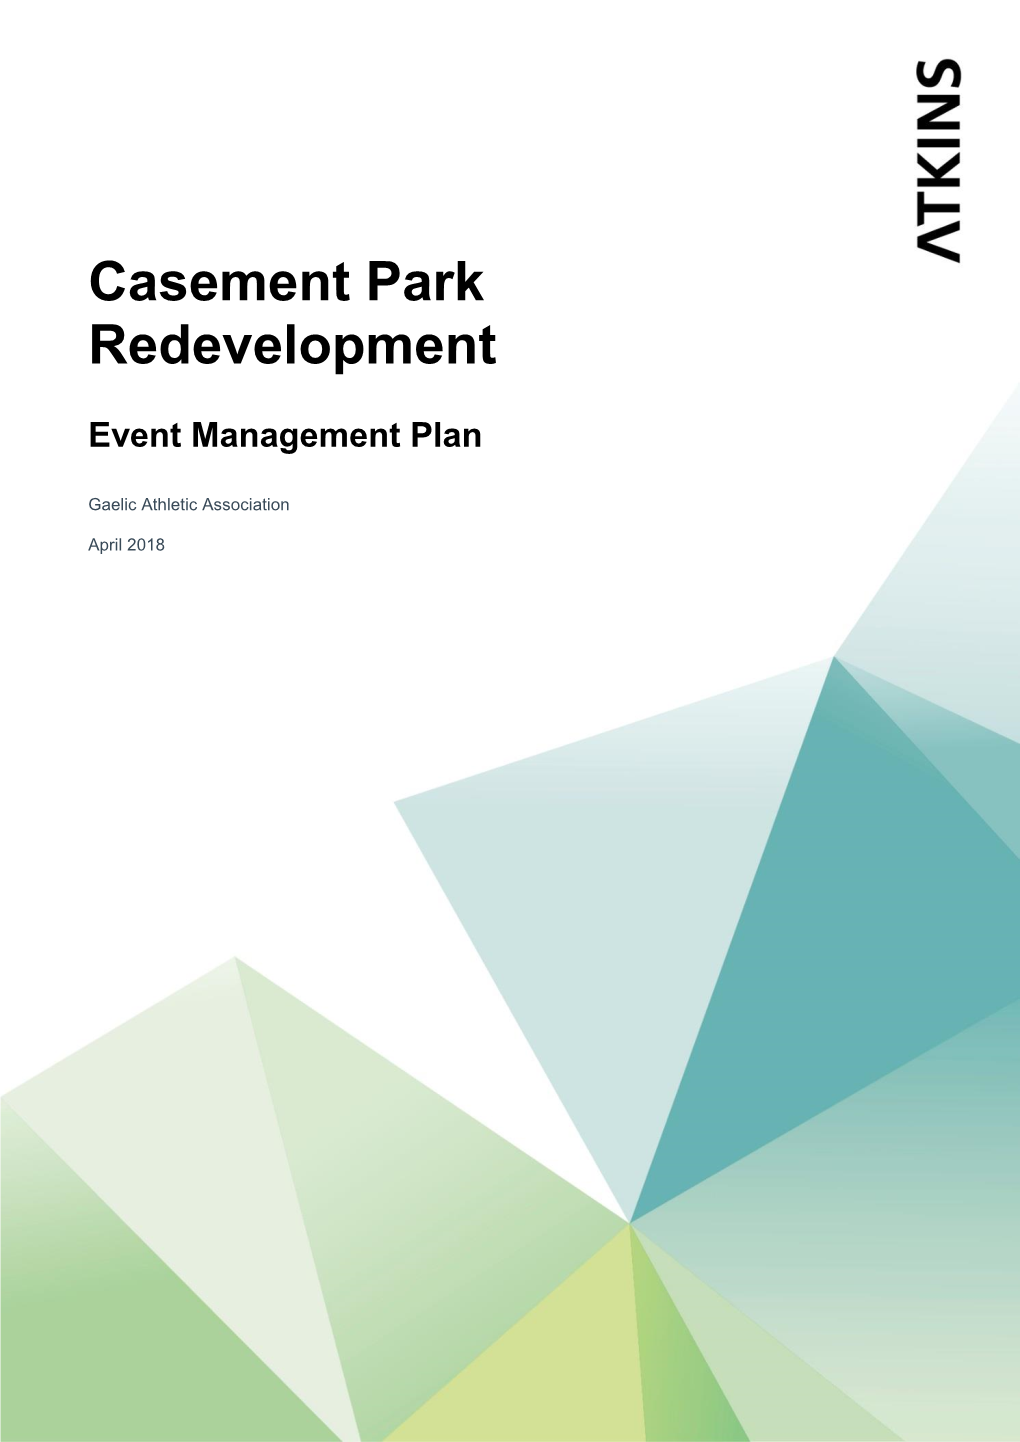 Casement Park Redevelopment Event Management Plan